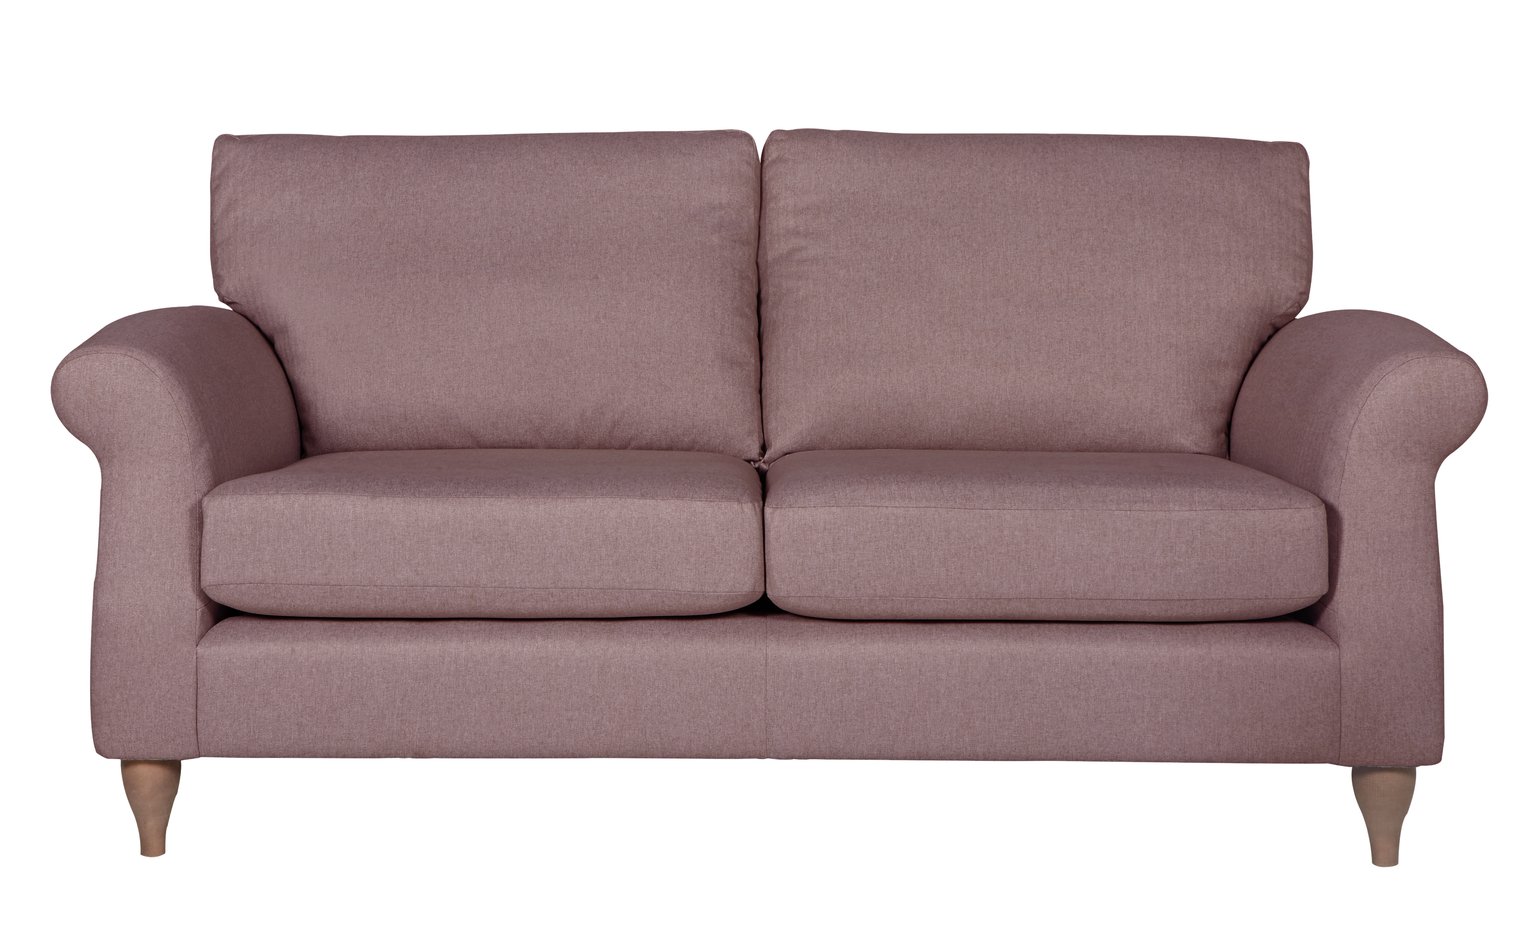 Argos Home Bude 3 Seater Fabric Sofa - Pink